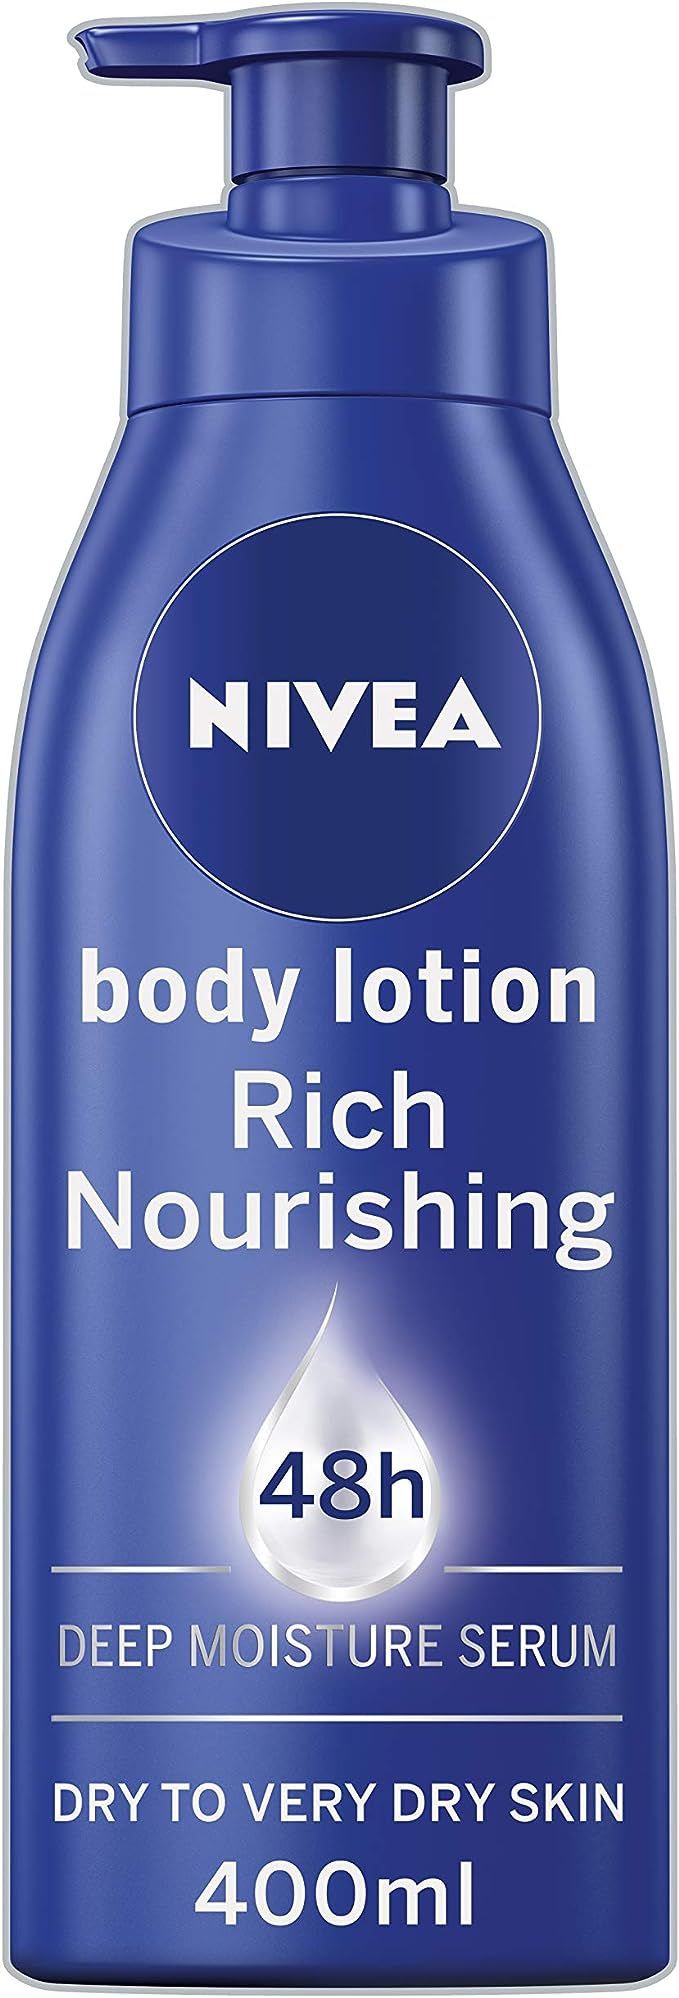 NIVEA Rich Nourishing Body Lotion (400ml), 48hr Replenishing Body Lotion, Intensive Moisturising ... | Amazon (UK)